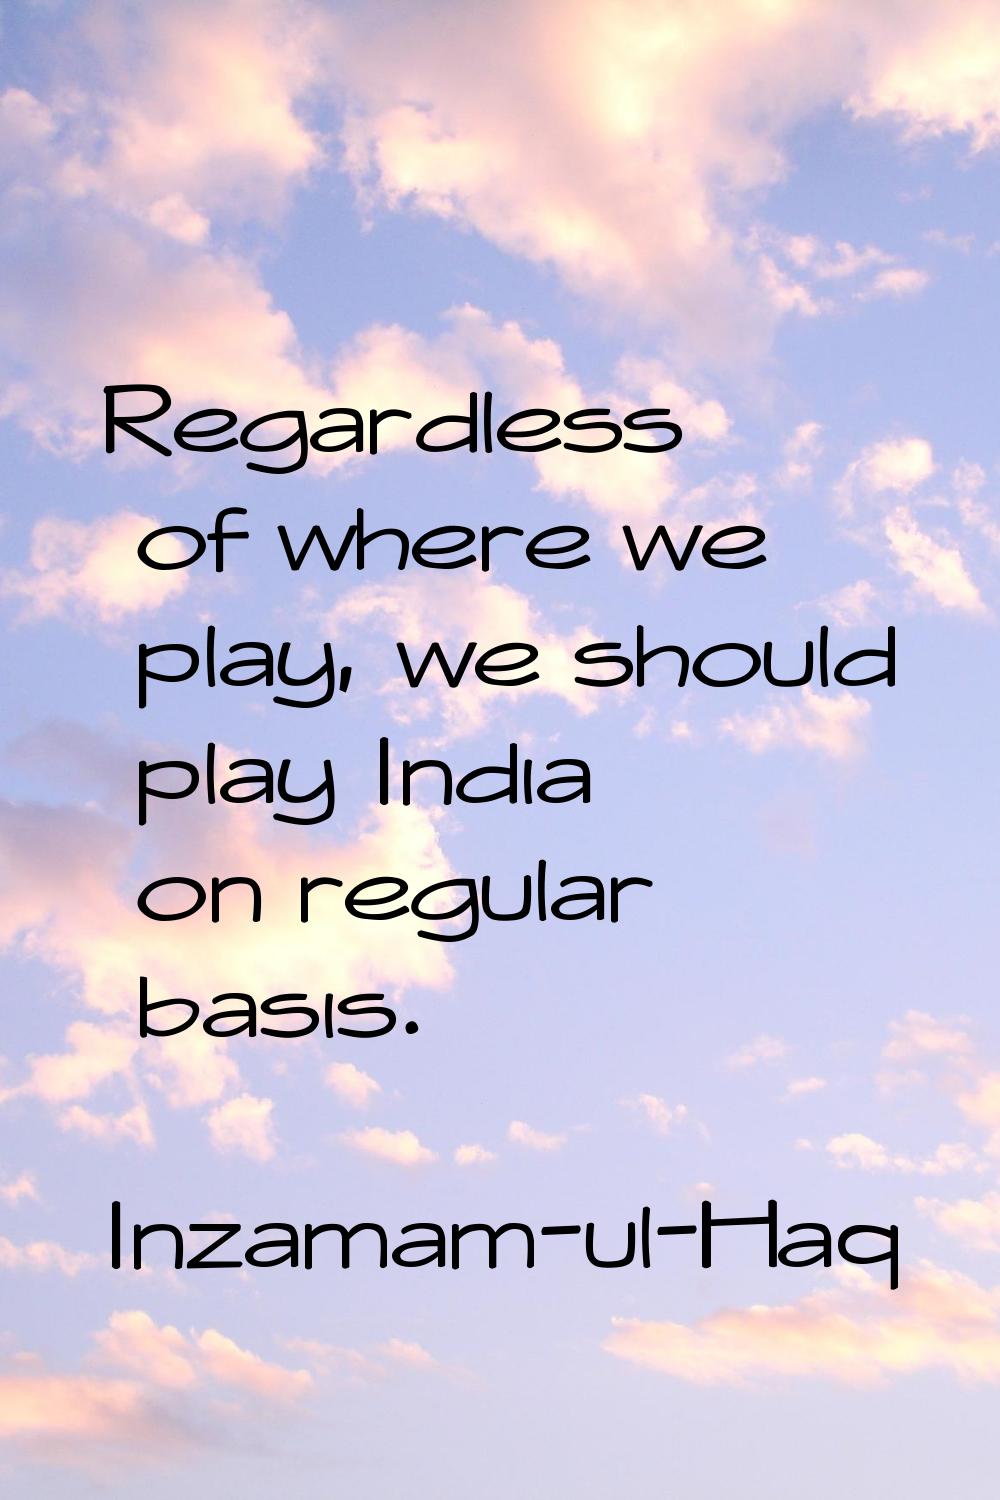 Regardless of where we play, we should play India on regular basis.